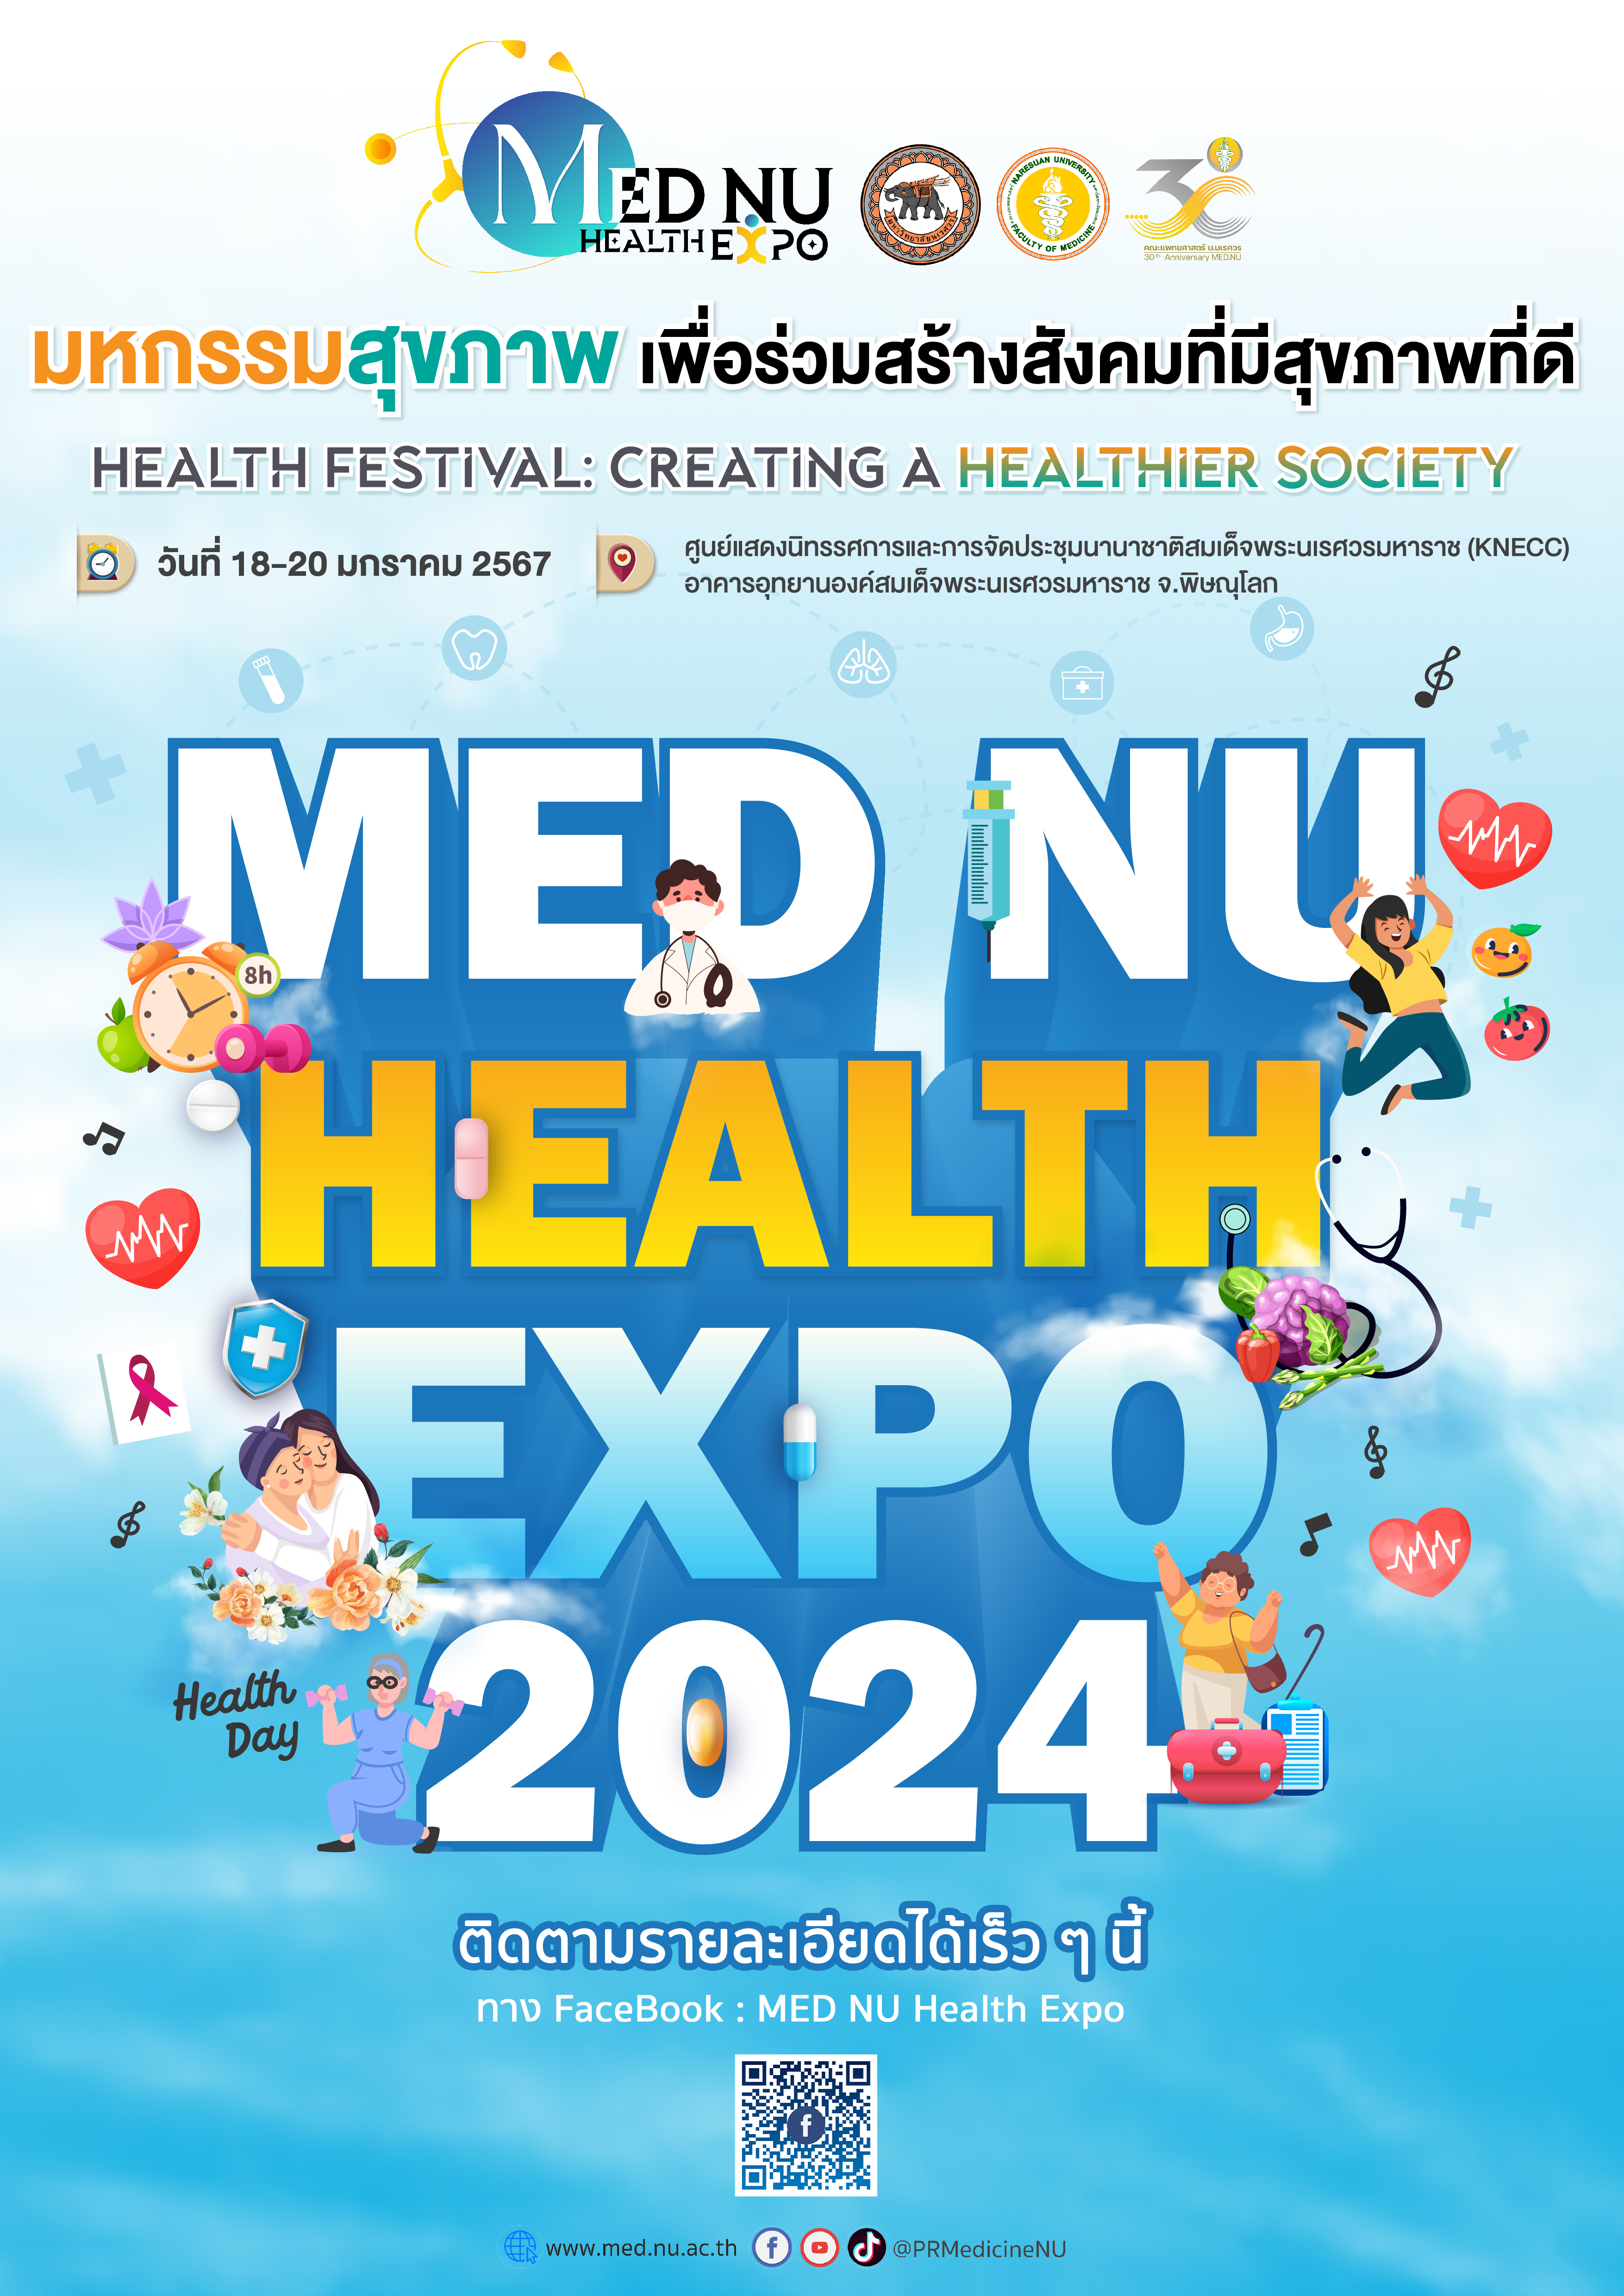 MED NU Health Expo “มหกรรมสุขภาพ เพื่อร่วมสร้างสังคมที่มีสุขภาพที่ดี